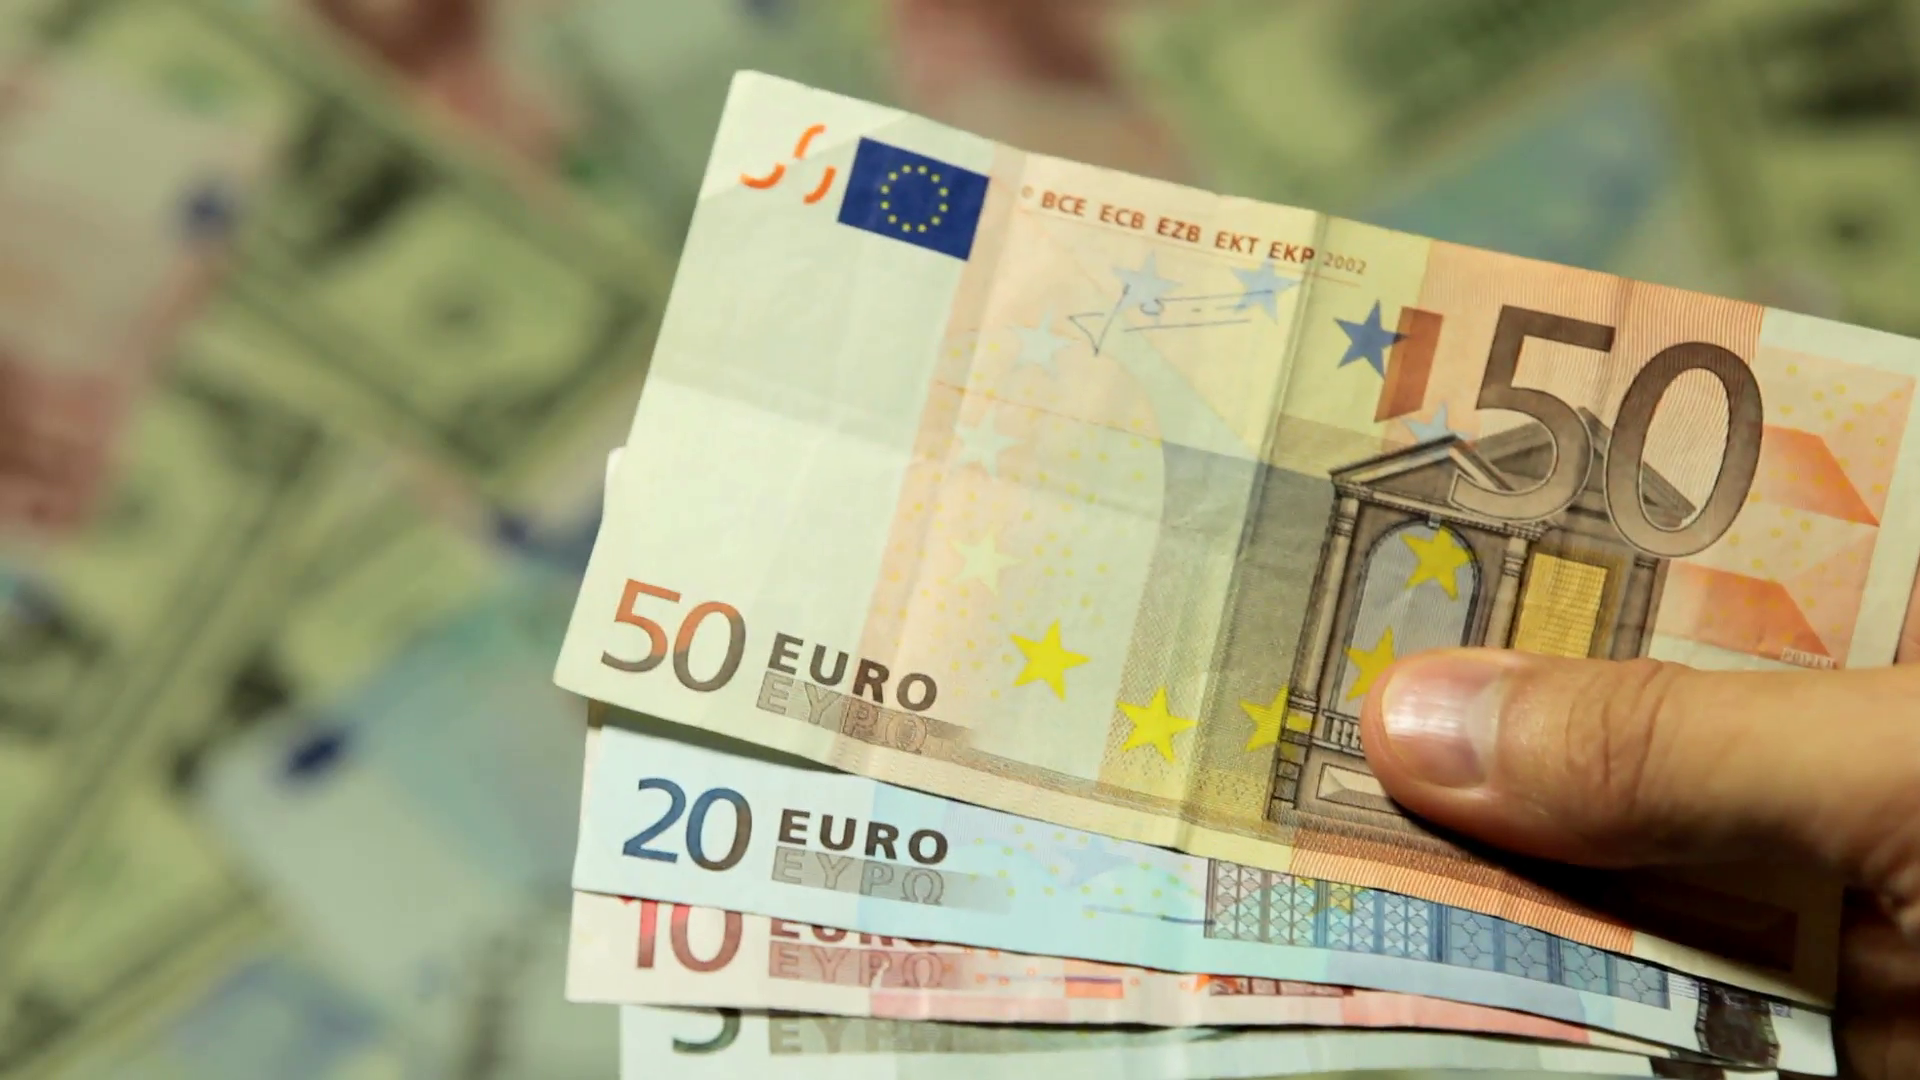 How Much EUR – Euro To Get A Vietnam Visa?